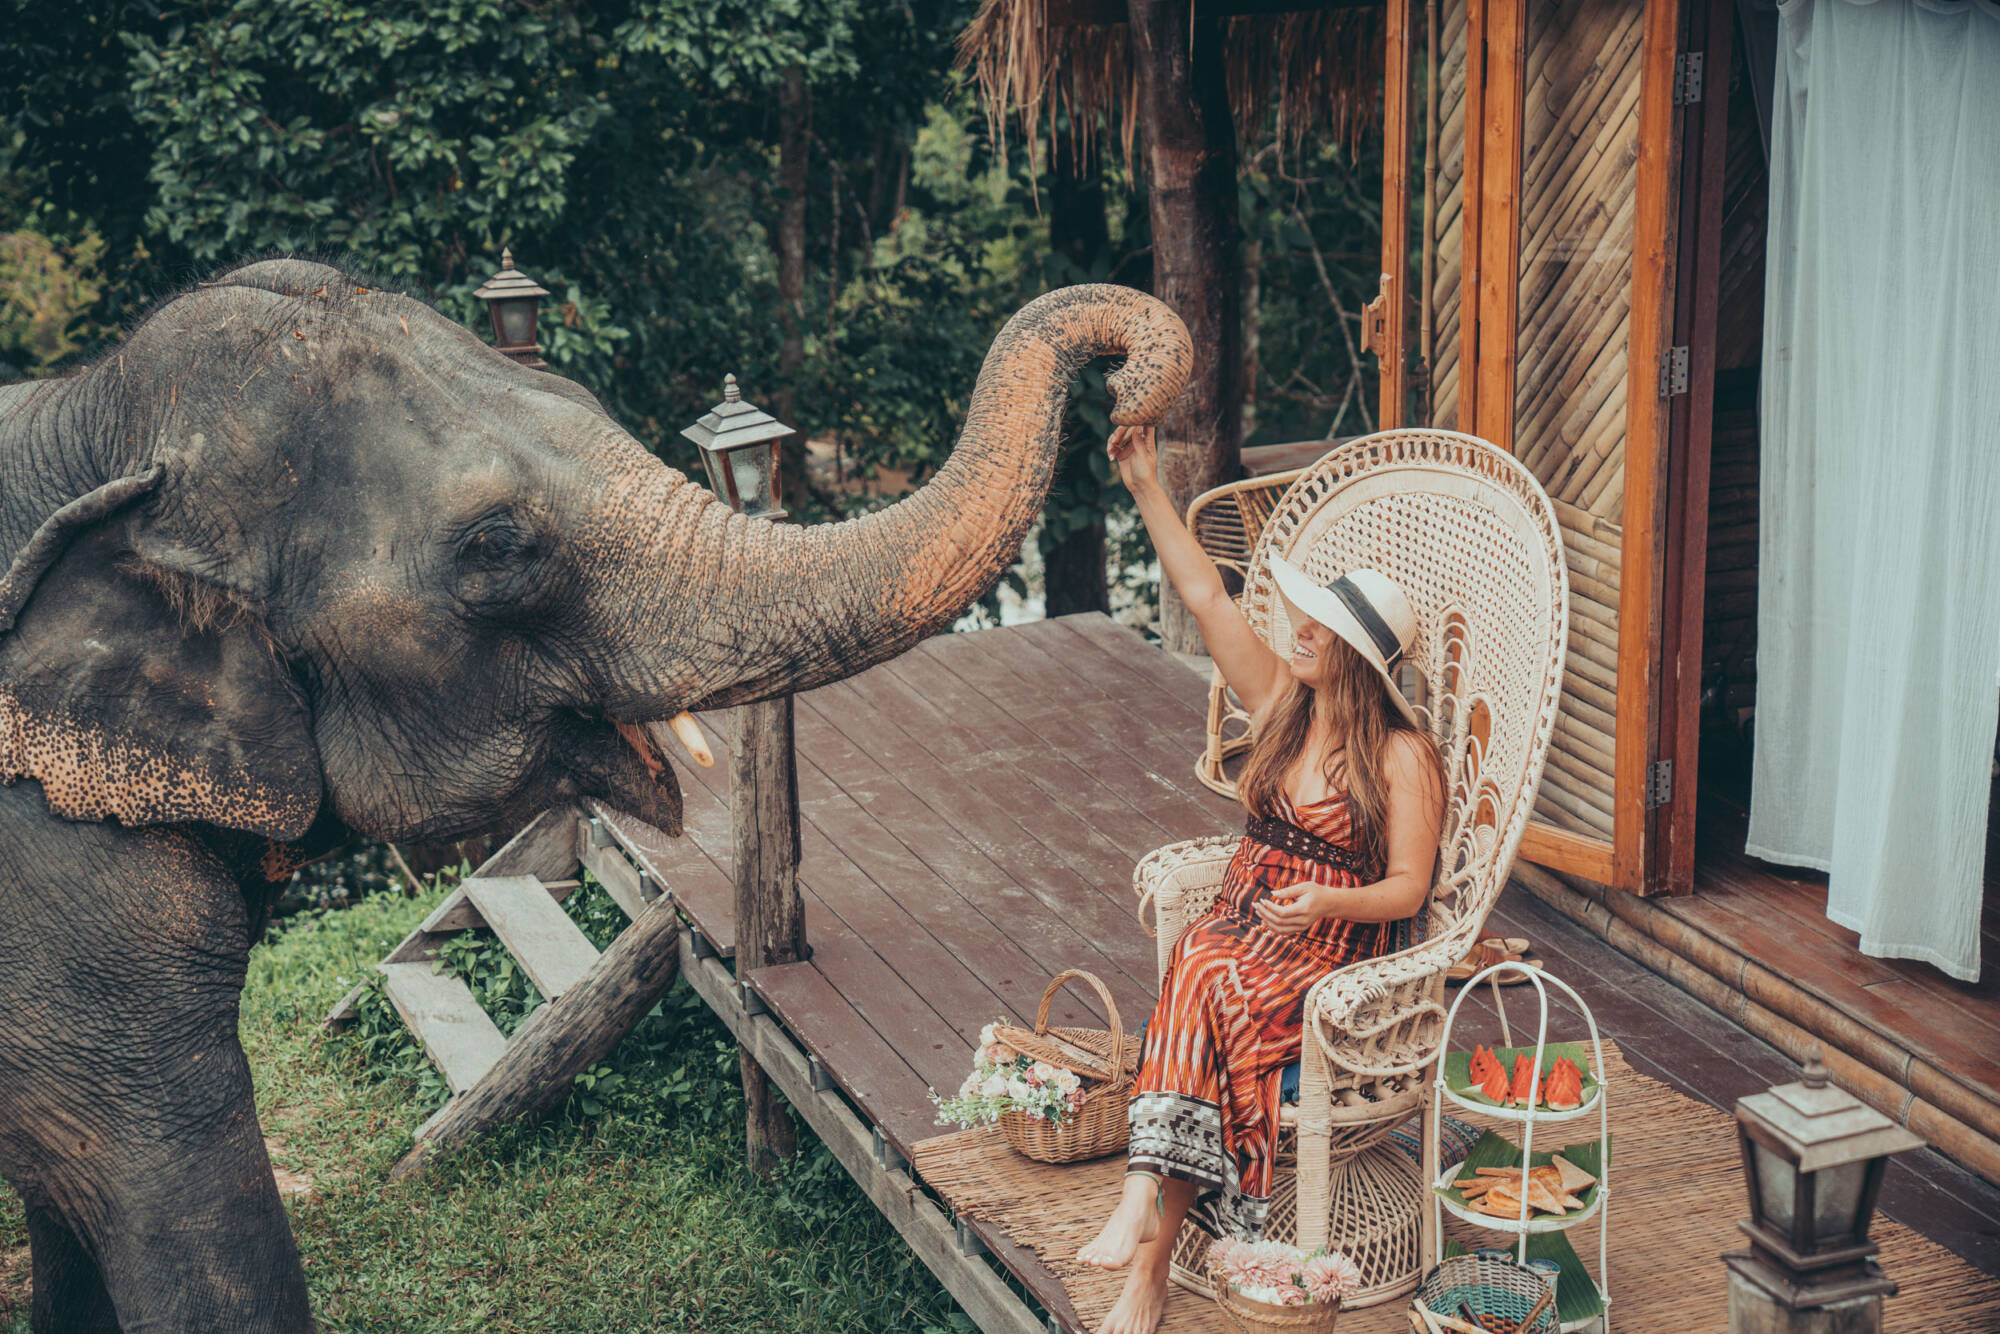 Feeding an elephant